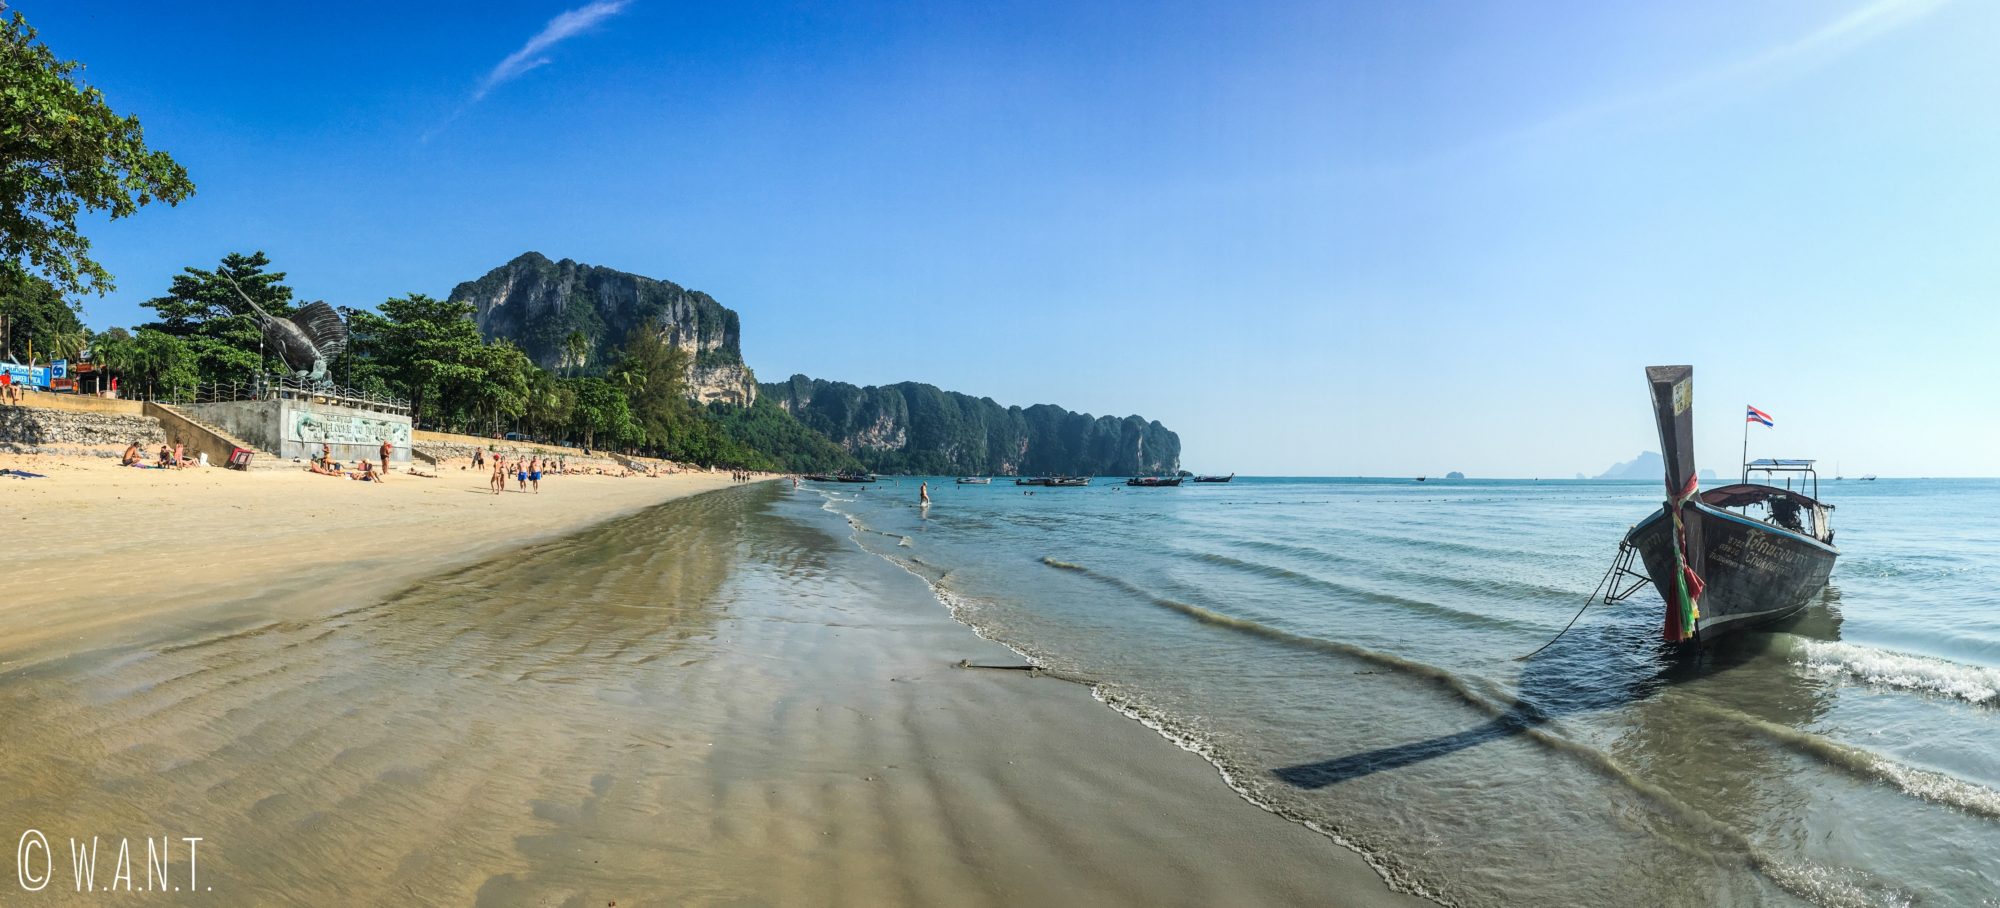 Panorama de la plage de Ao Nang dans la province de Krabi